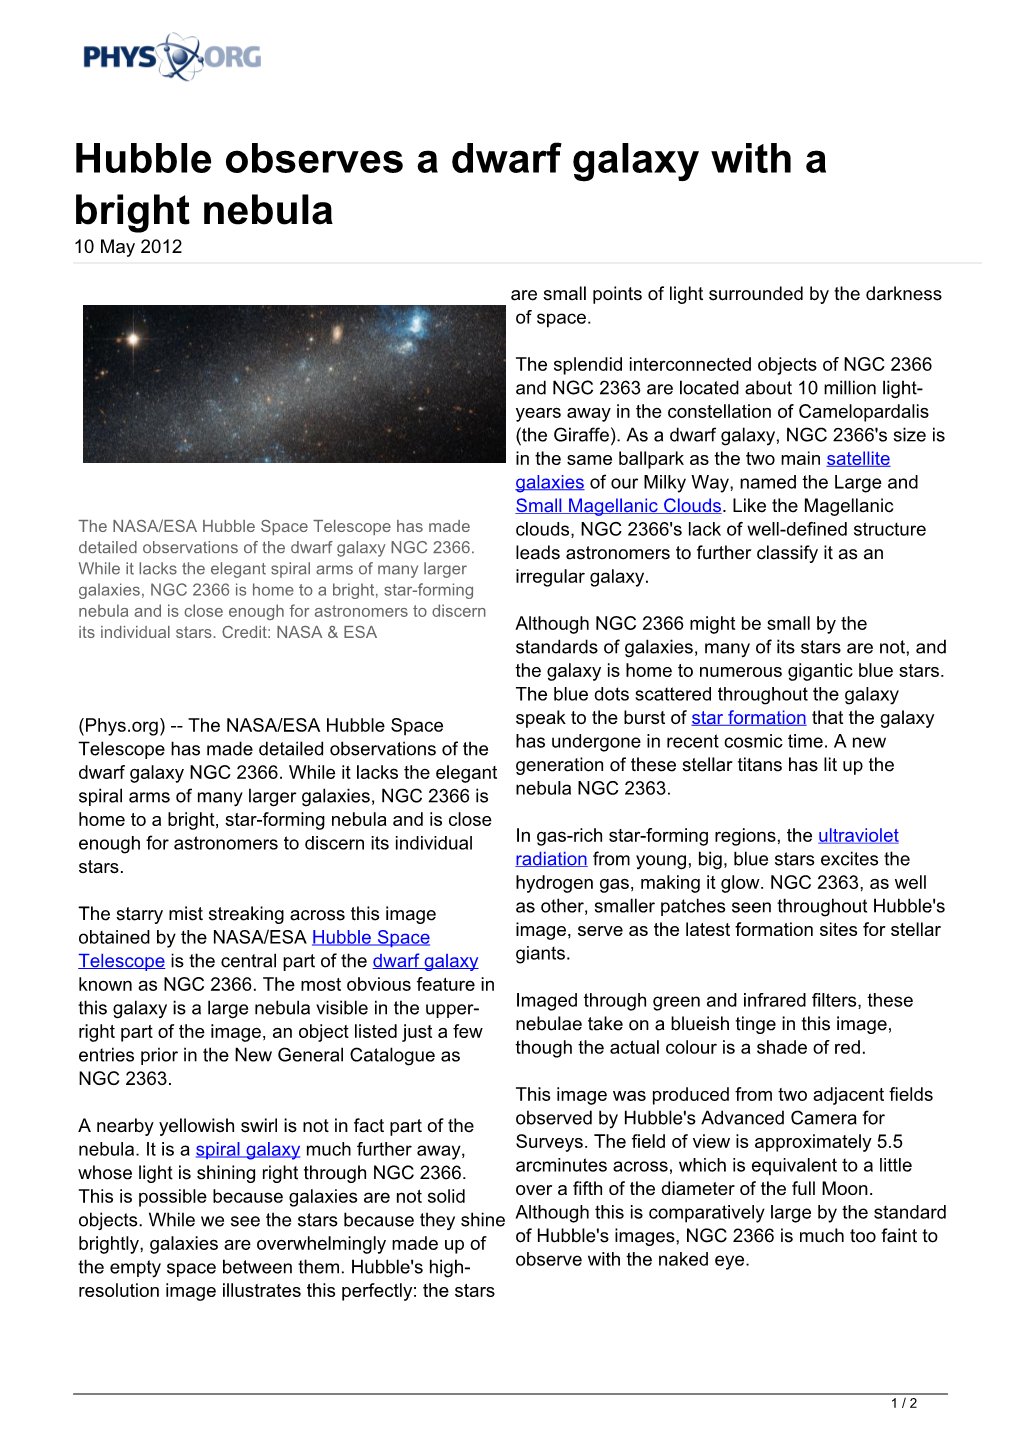 Hubble Observes a Dwarf Galaxy with a Bright Nebula 10 May 2012